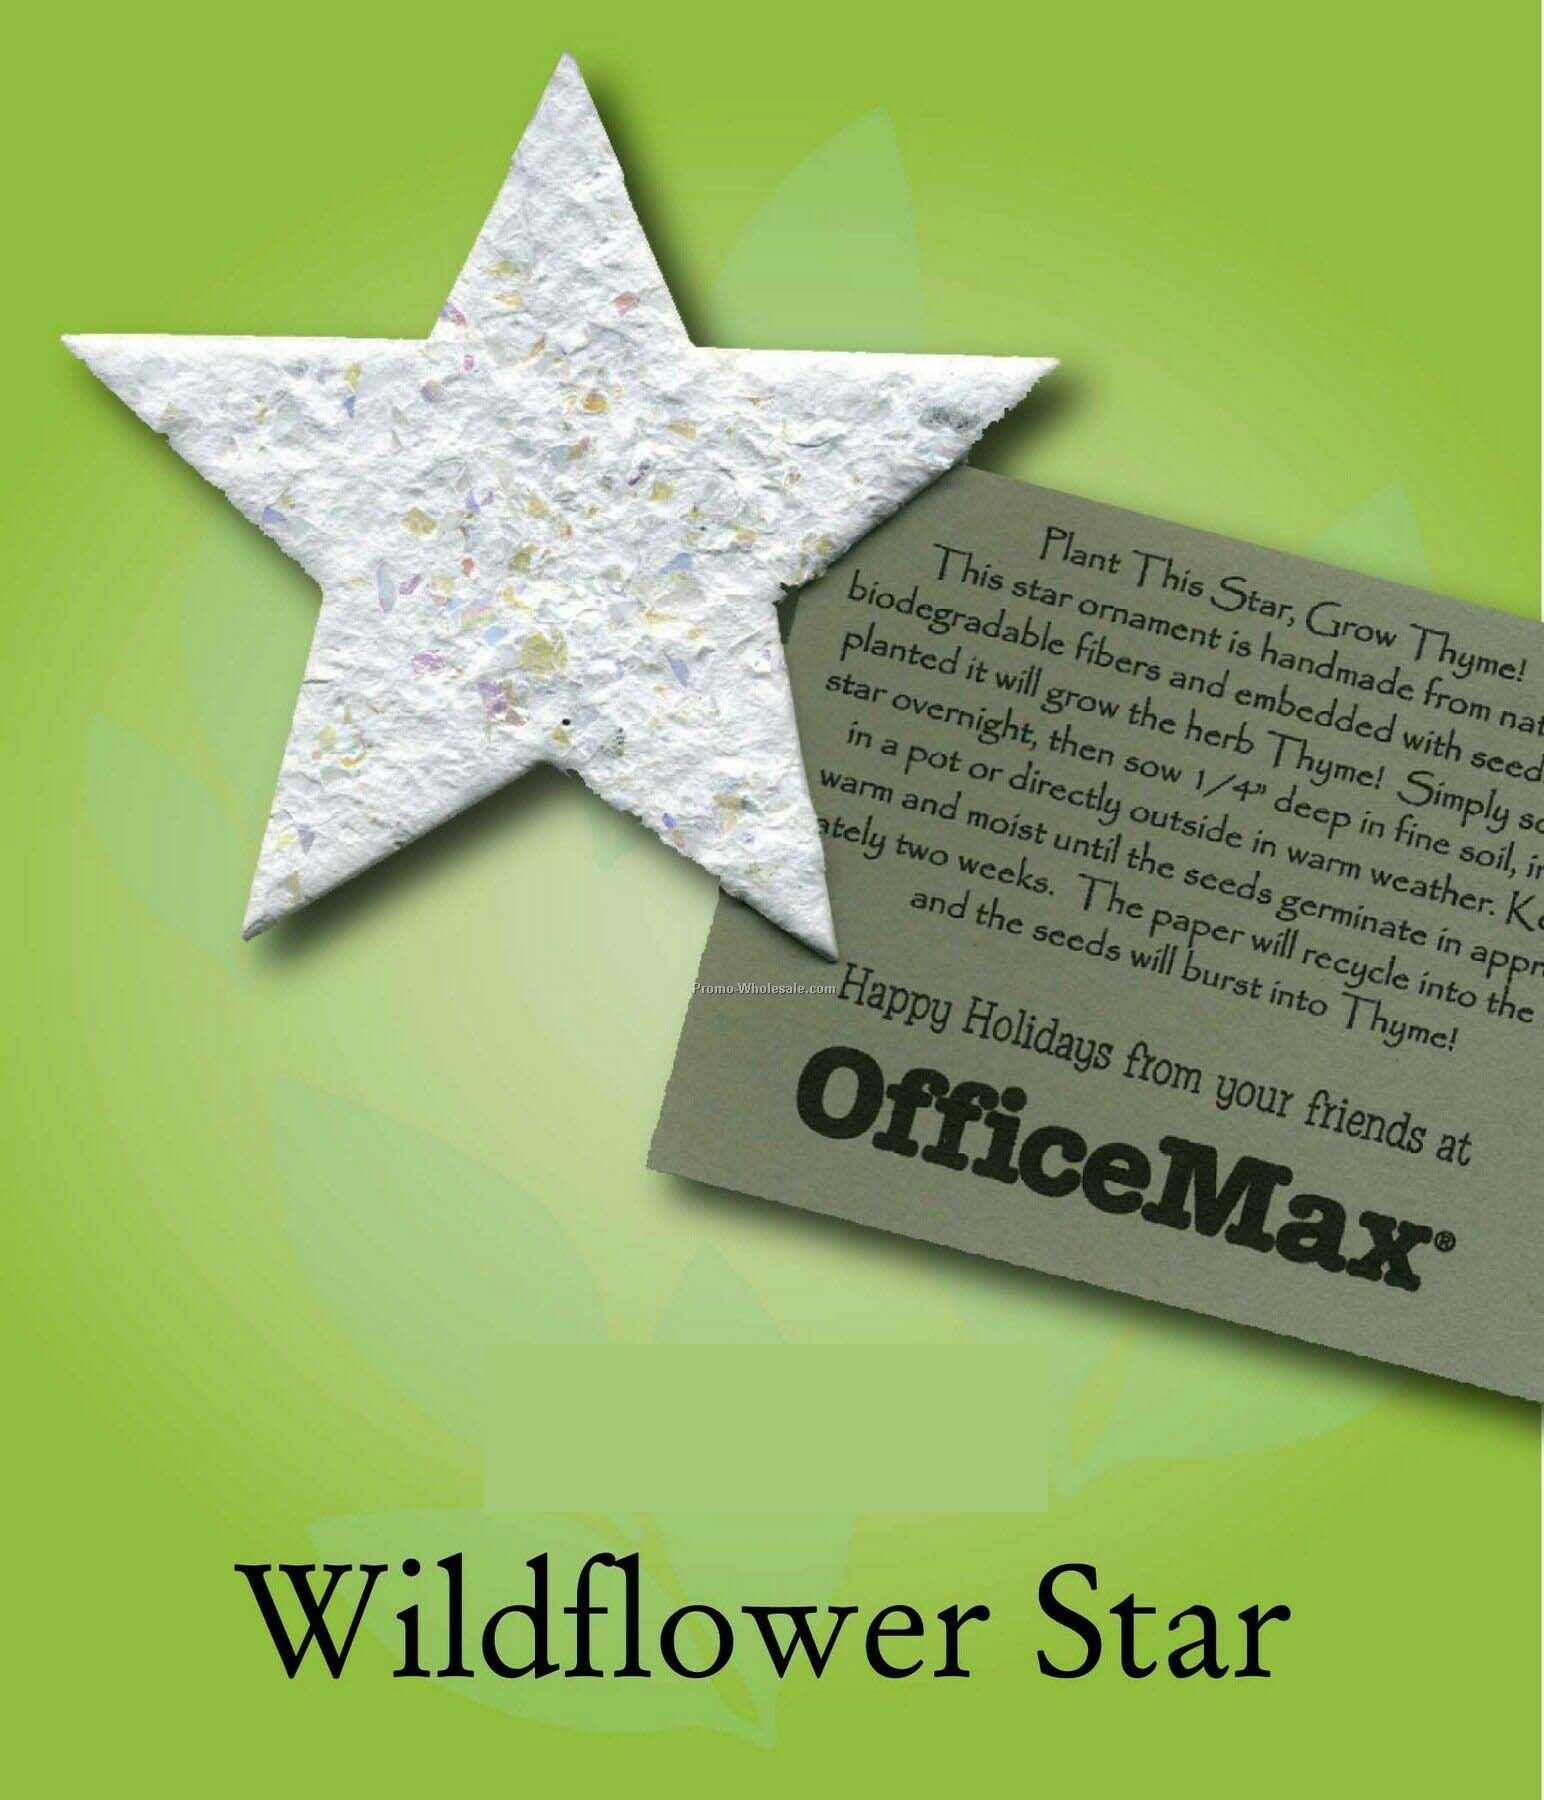 Wildflower Star Ornament W/ Embedded Seed